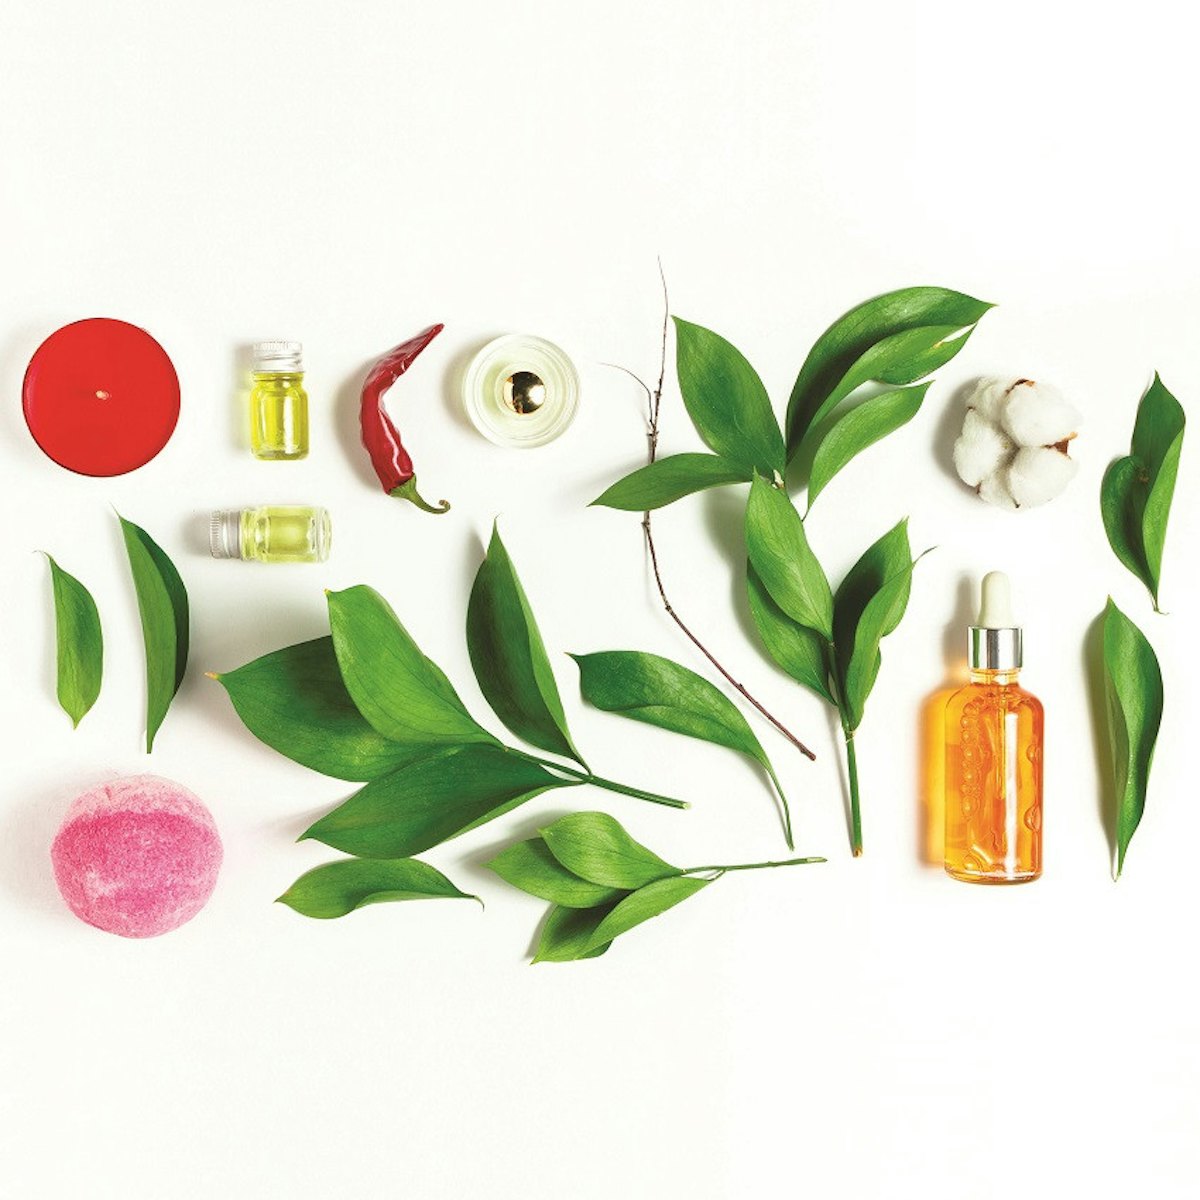 Pulp Perfume Oil - The Perfume Oil Co